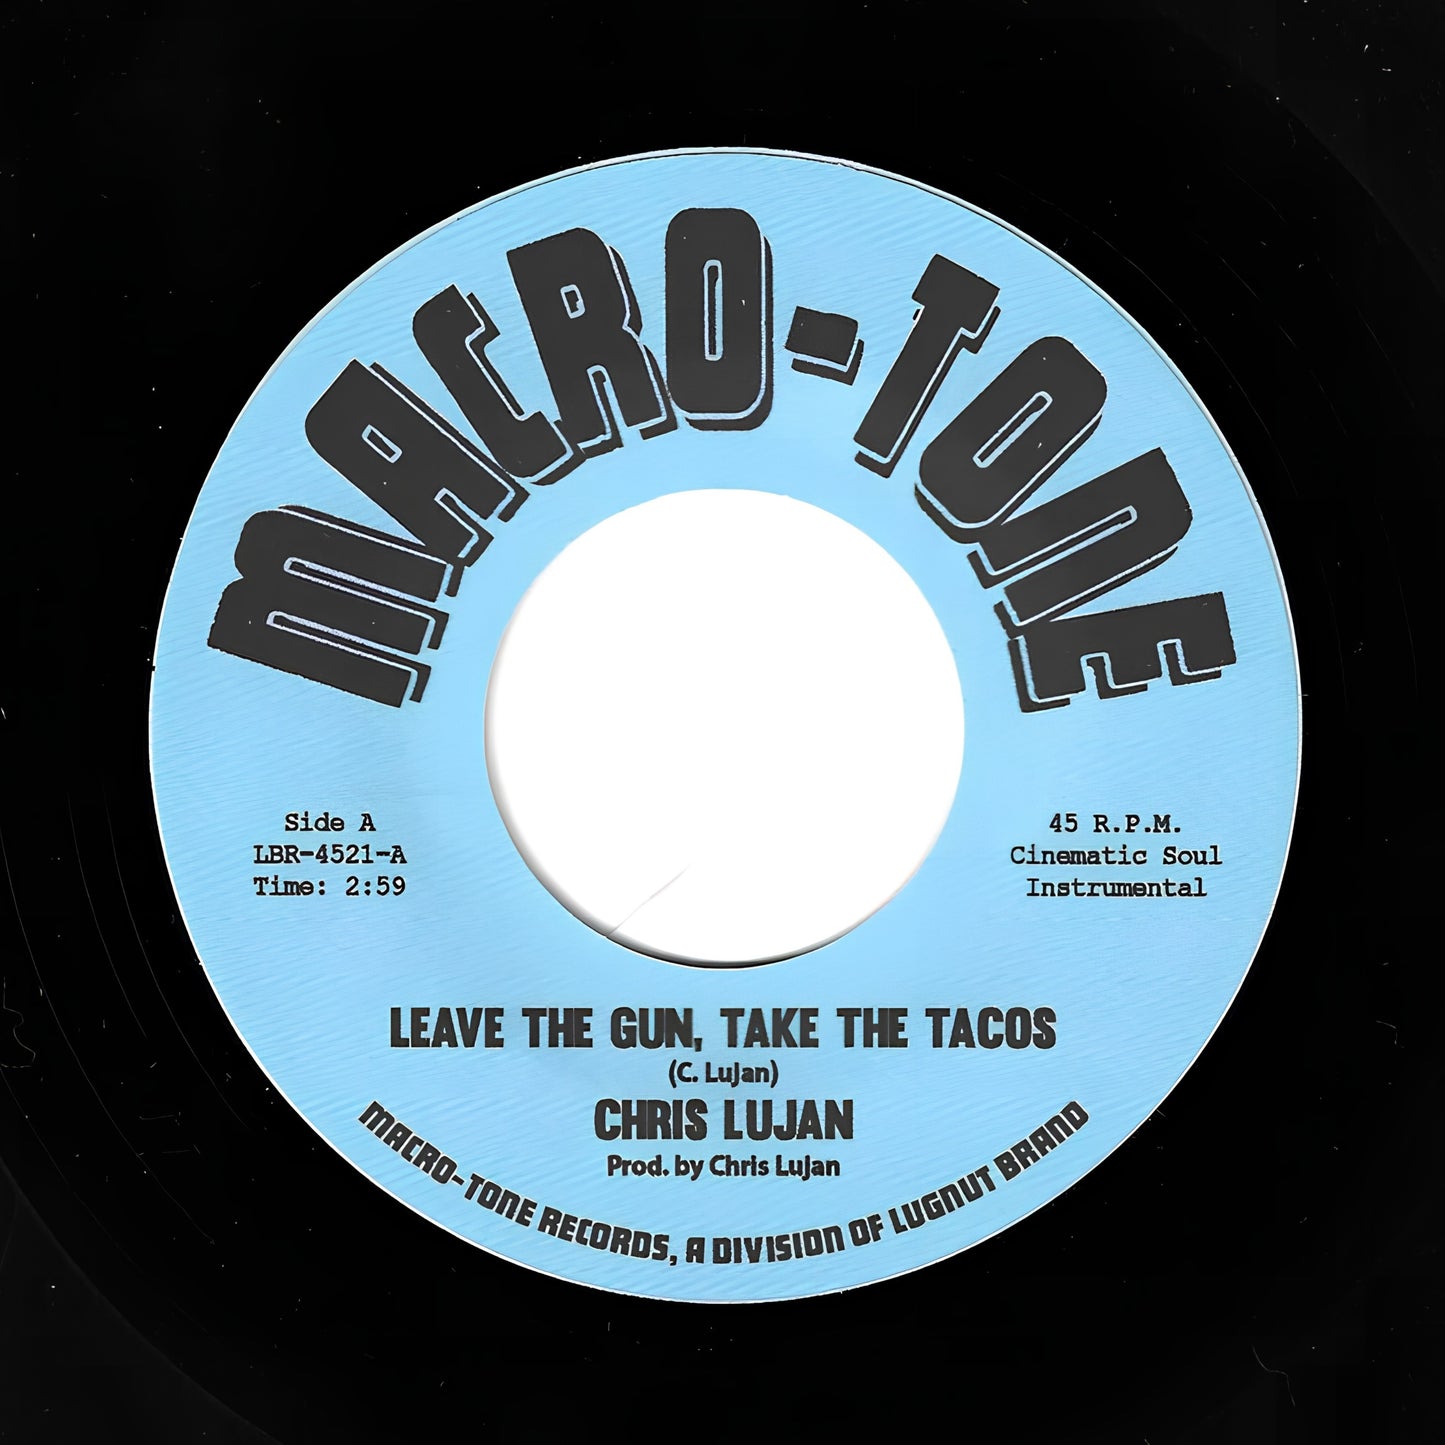 Chris Lujan “Leave the Gun, Take the Tacos” 45